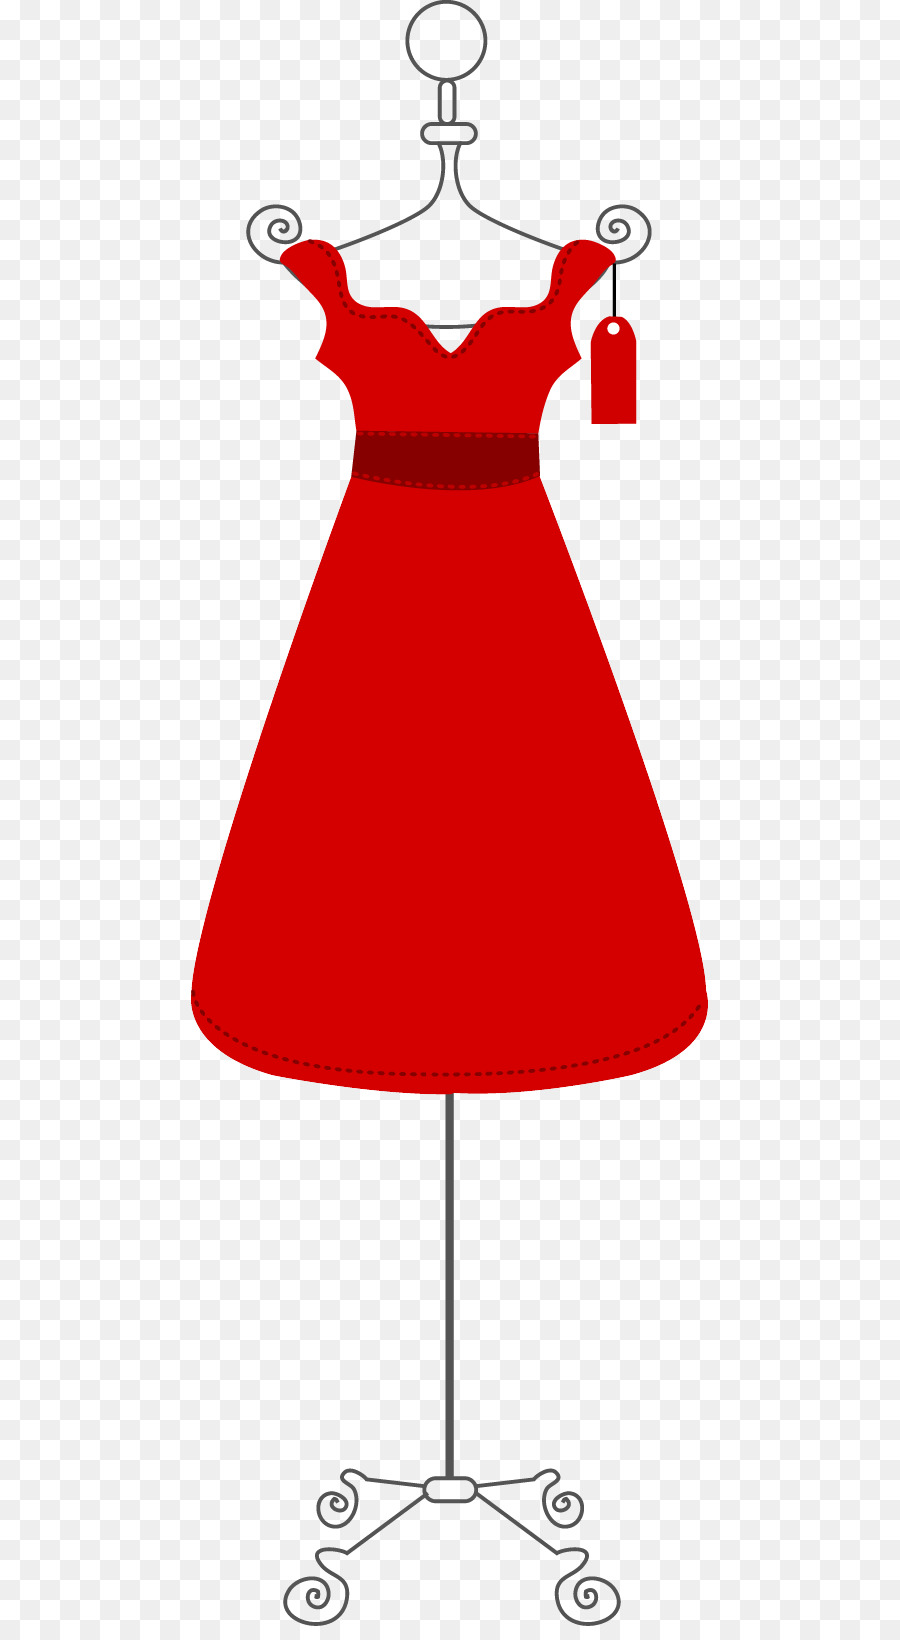 Красное платье на вешалке